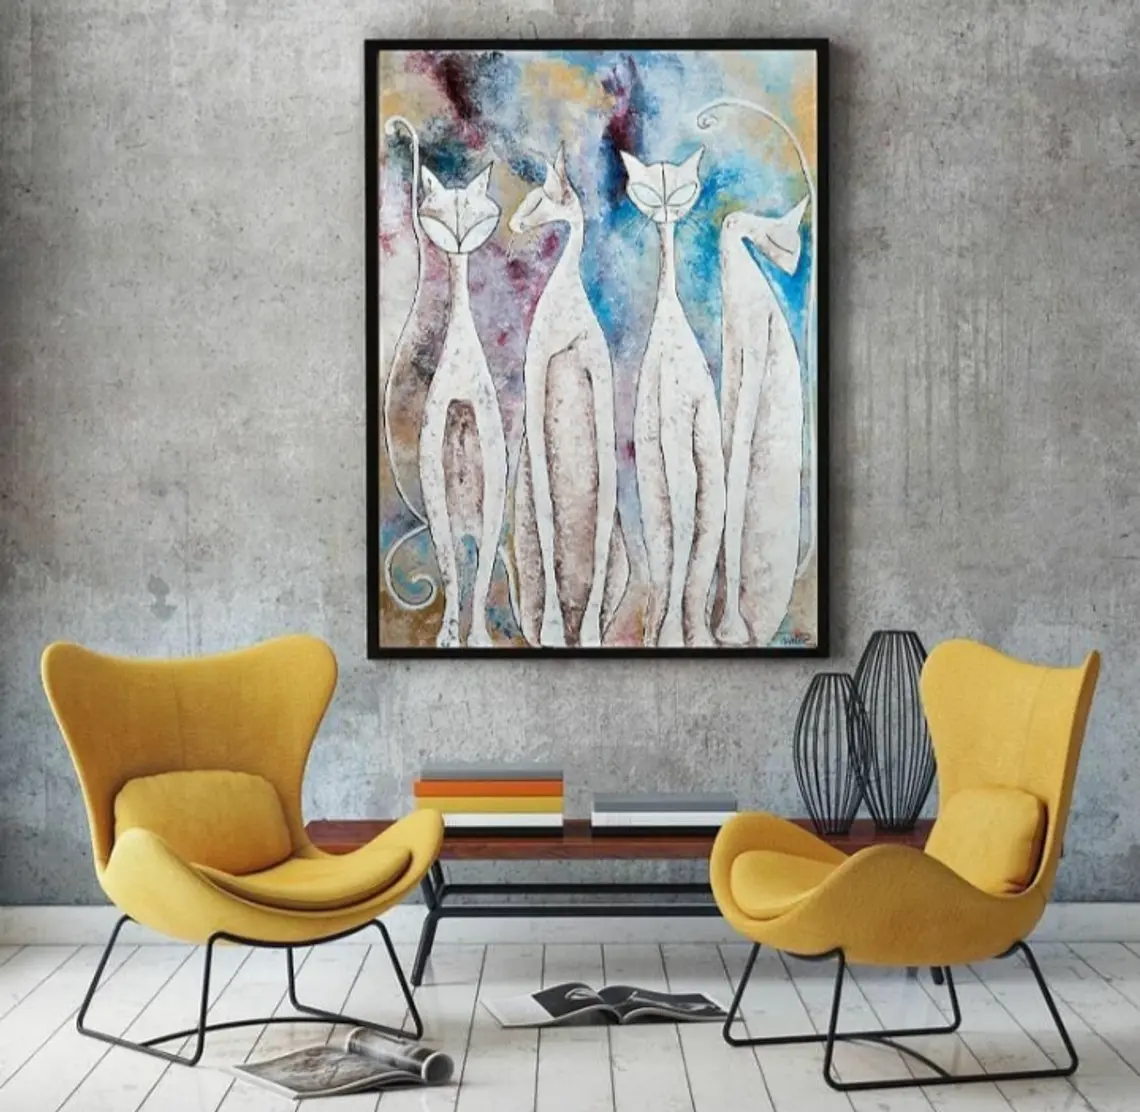 Modern art,Furniture,Painting,Room,Interior design,Wall